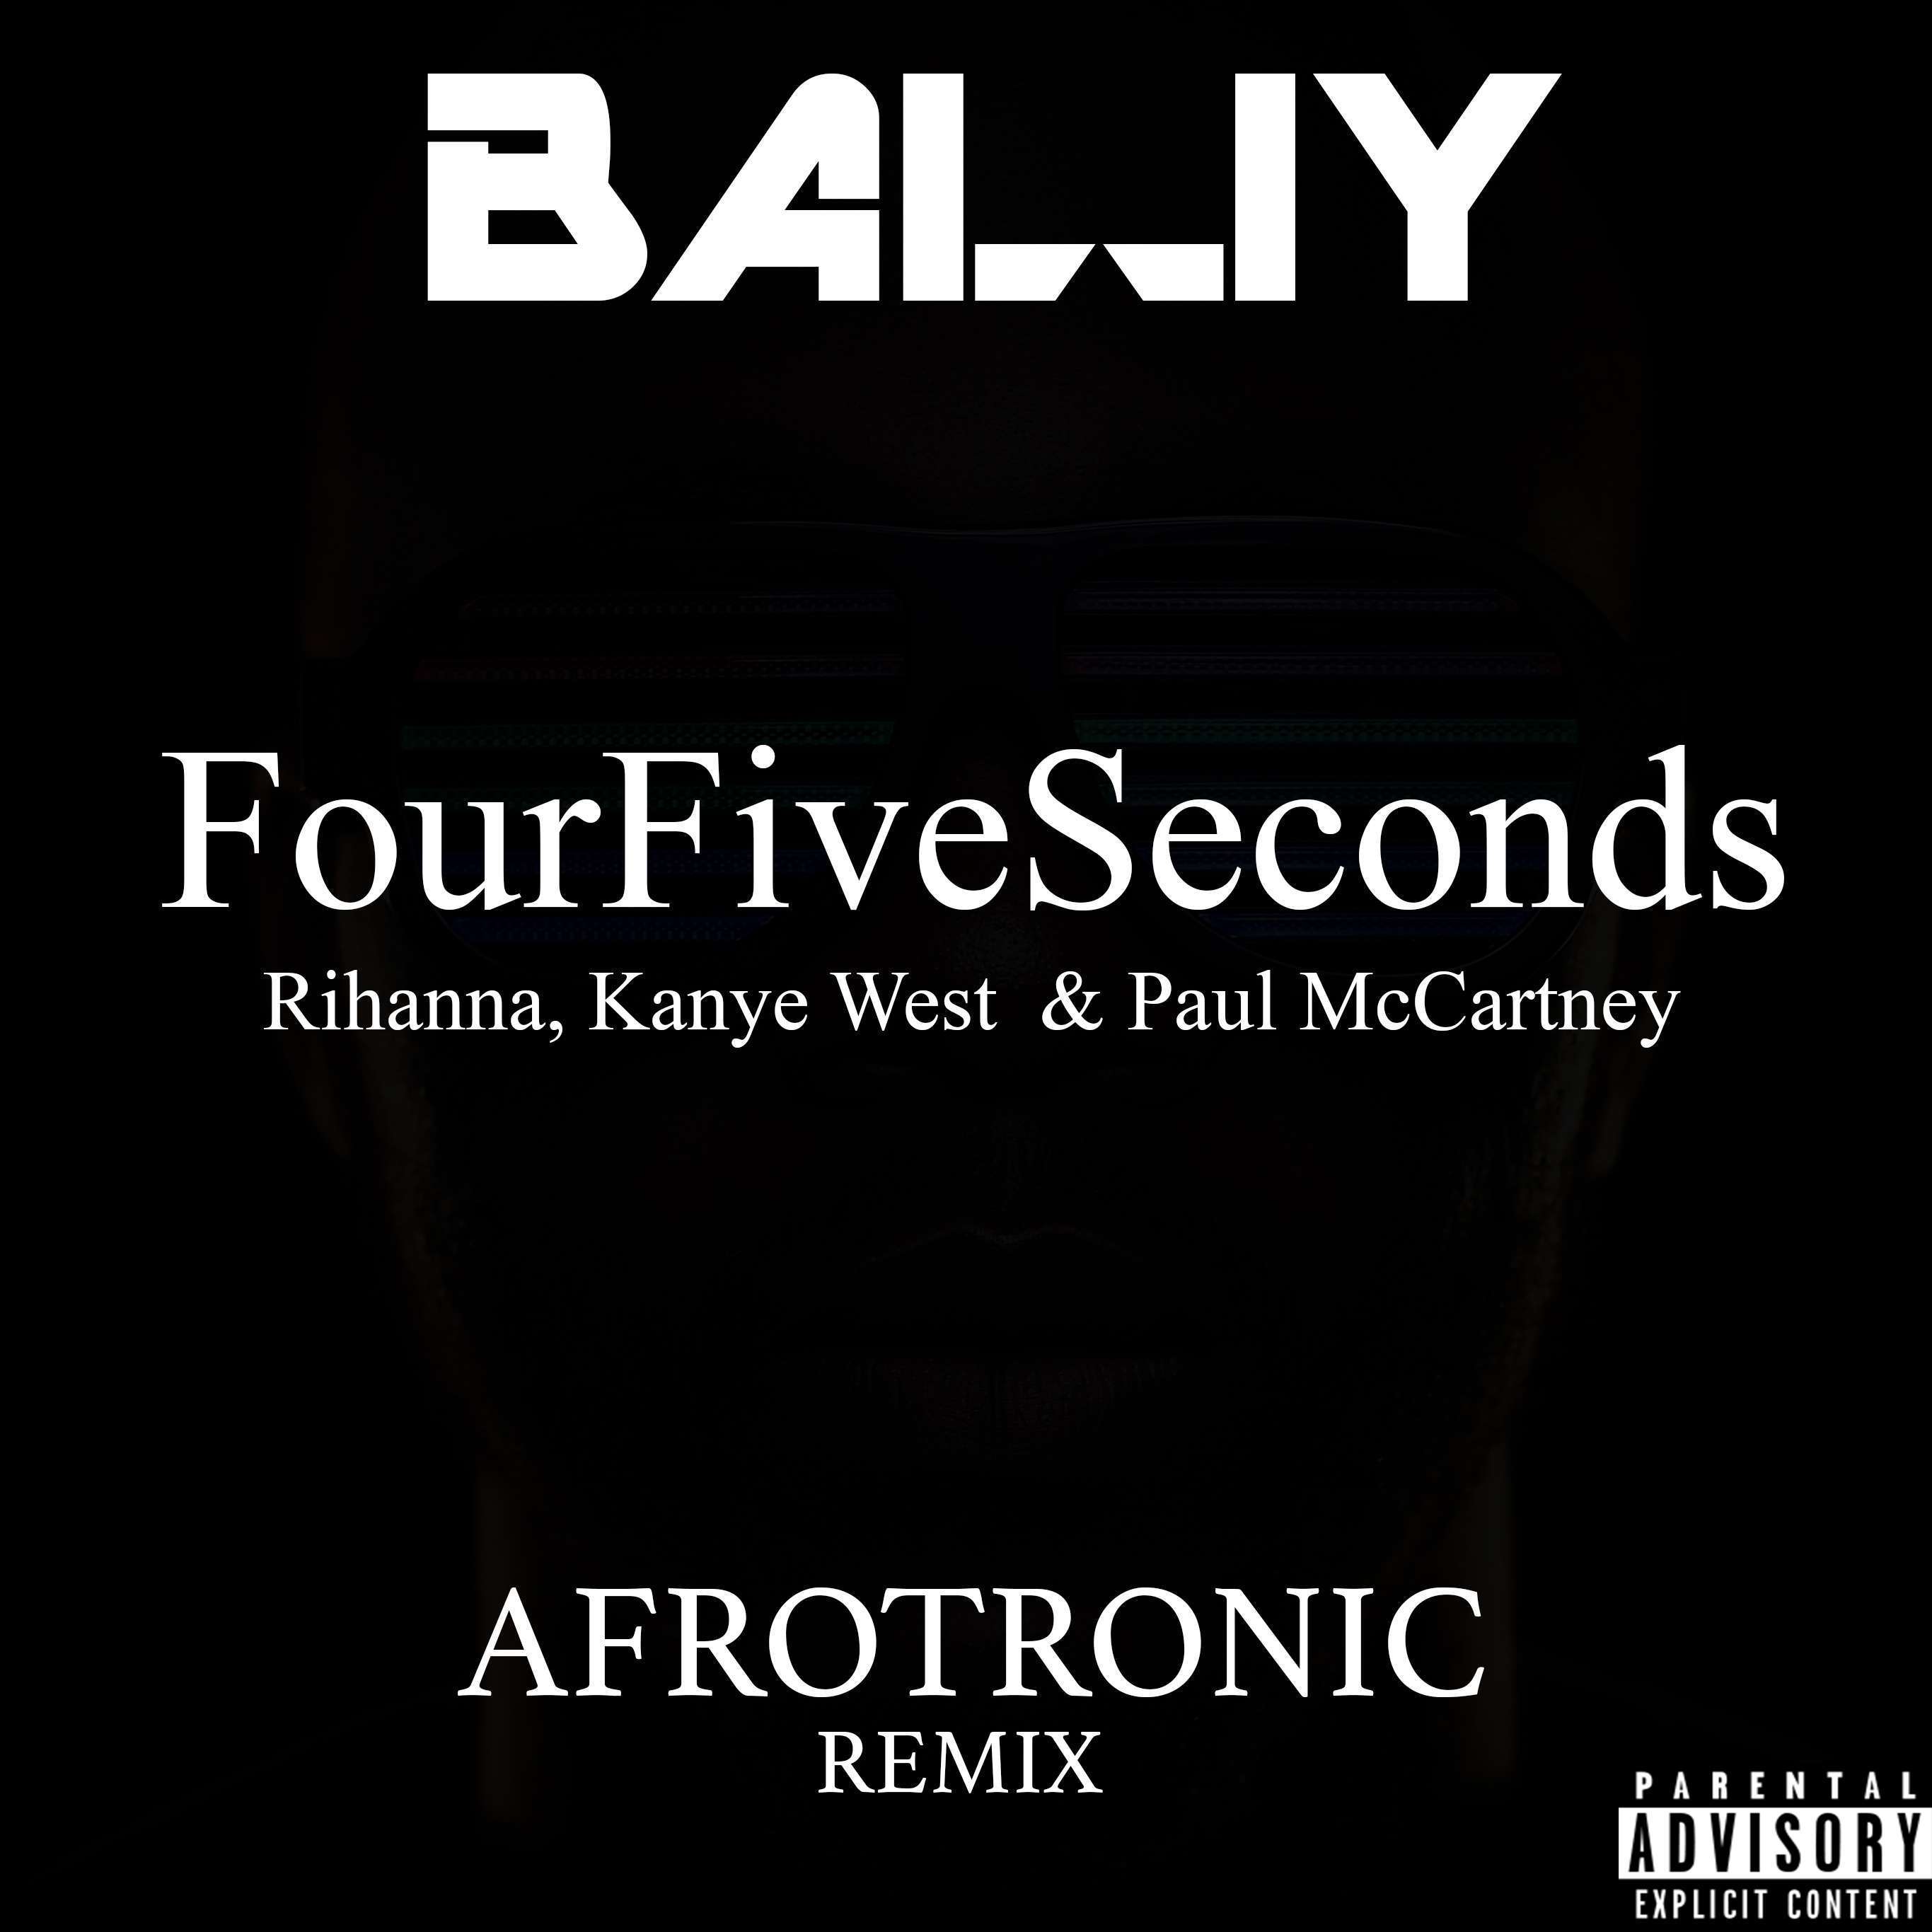 FourFiveSeconds (Afrotronic Remix) - DJ Bally